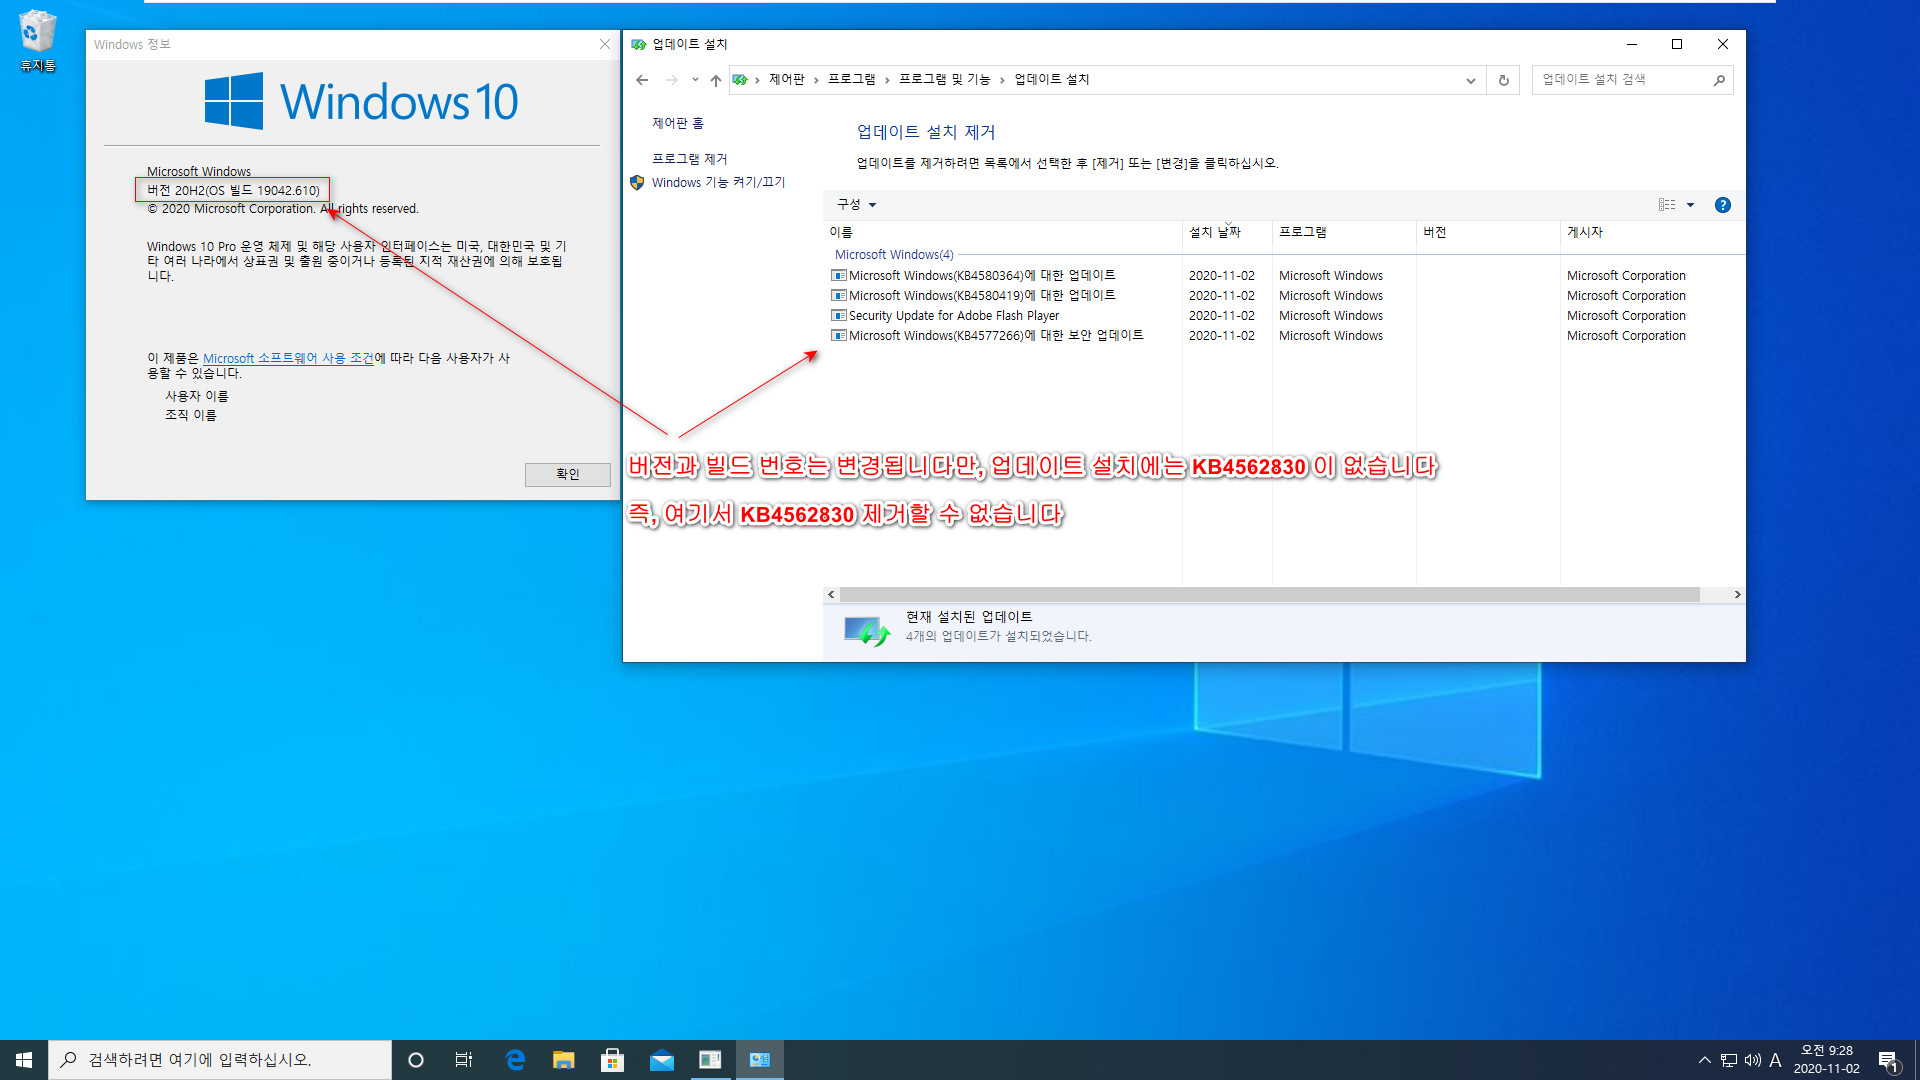 Windows 10 버전 20H2 기능 업데이트 KB4562830 폴더의 mum 파일들만 찾아서 설치하기.bat - 크로미엄 엣지 설치하지 않고 버전 20H2만 설치하기 테스트 2020-11-02_092836.jpg